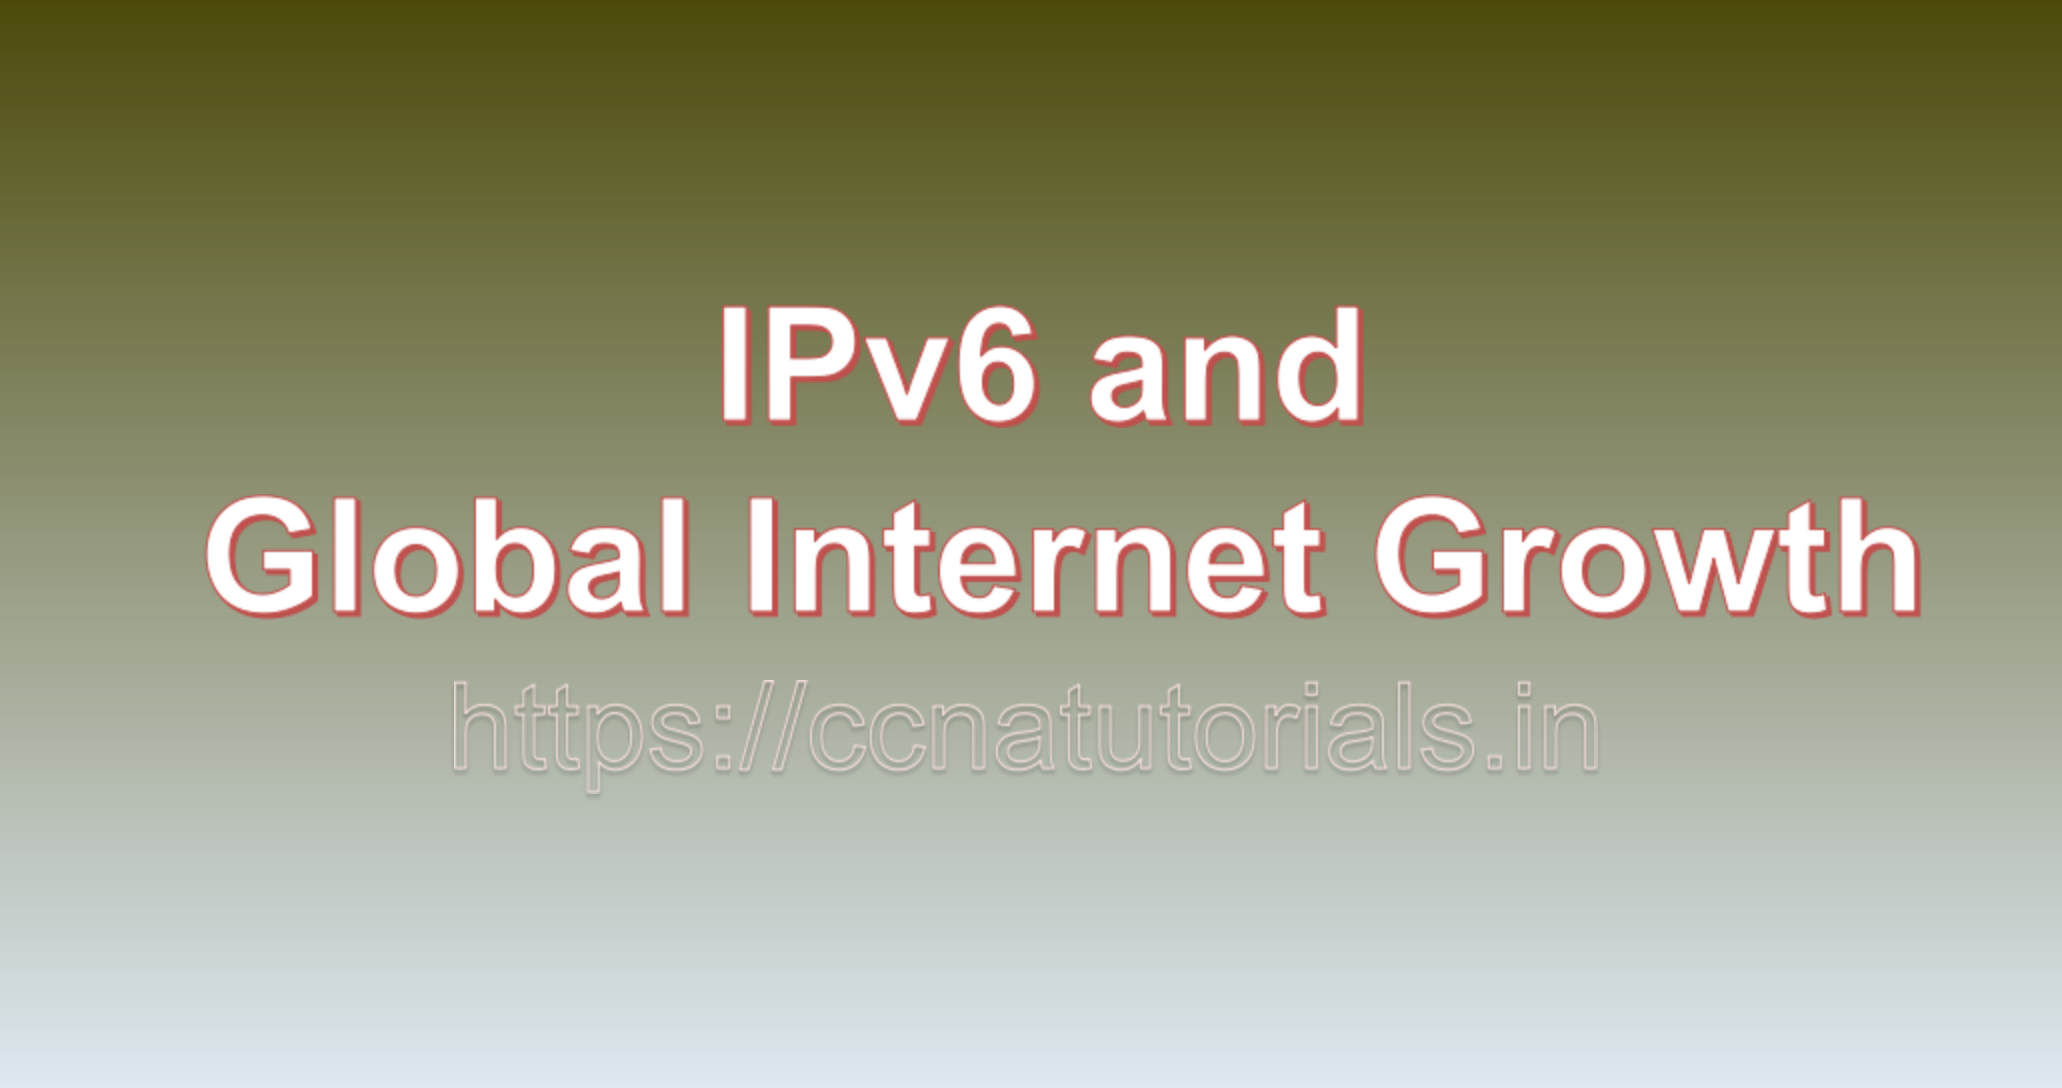 IPv6 and Global Internet Growth, ccna, ccna tutorial